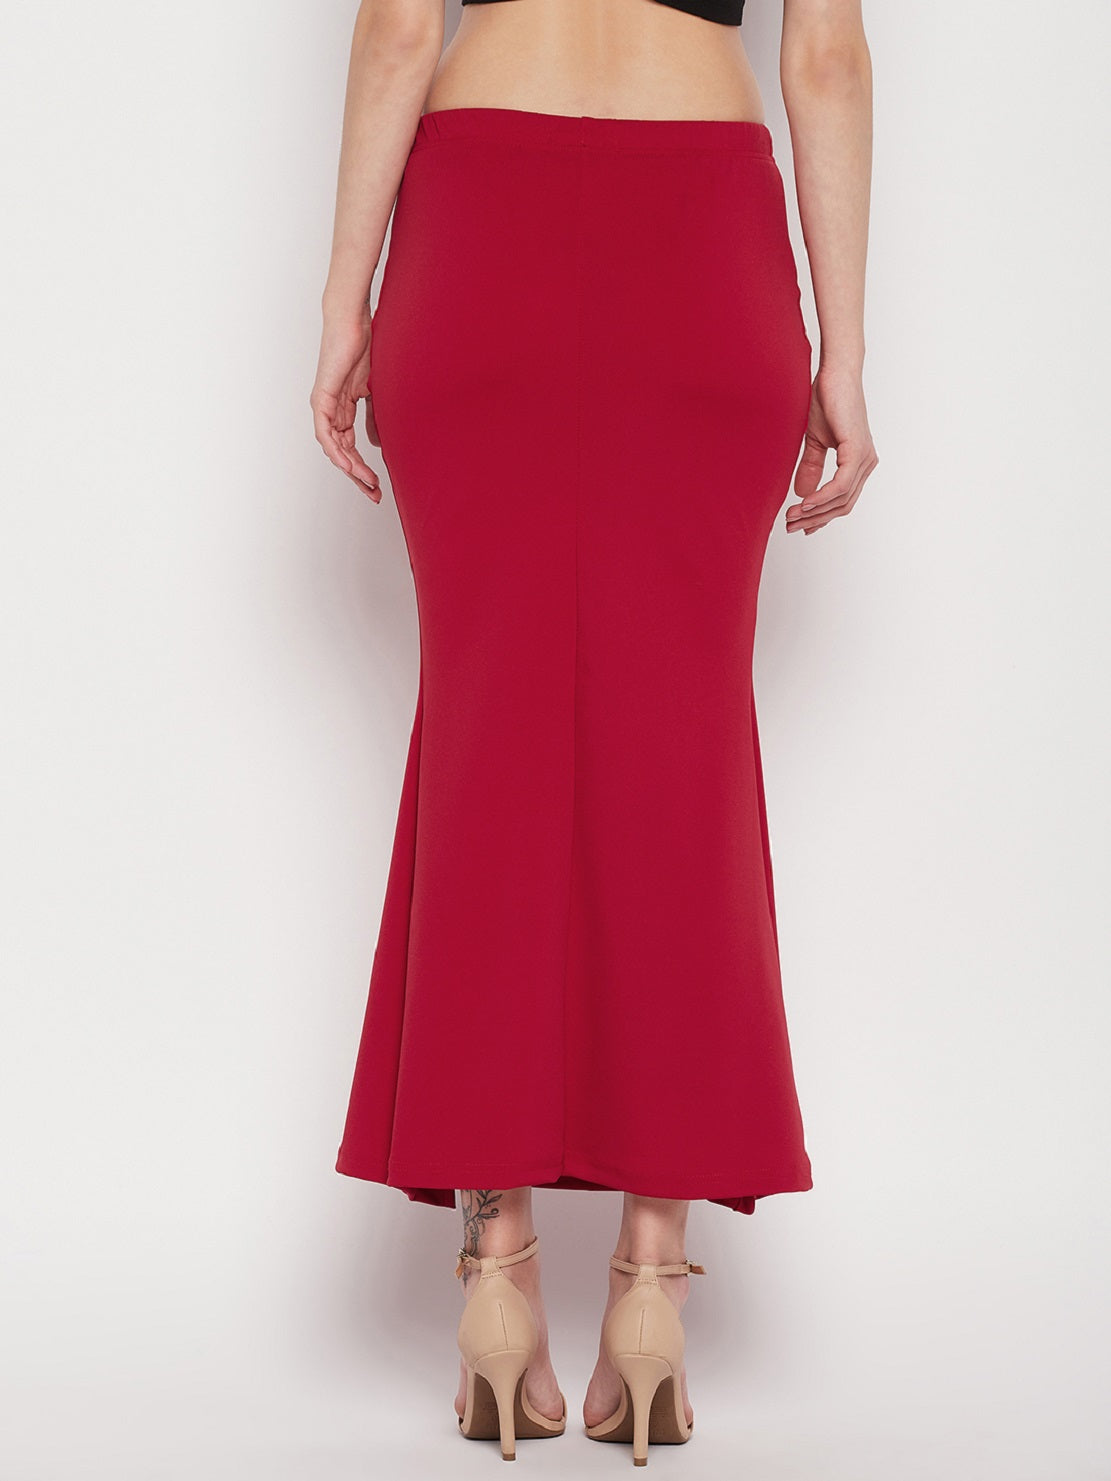 Saree Shapewear Petticoat with Drawstring in Peach Colour